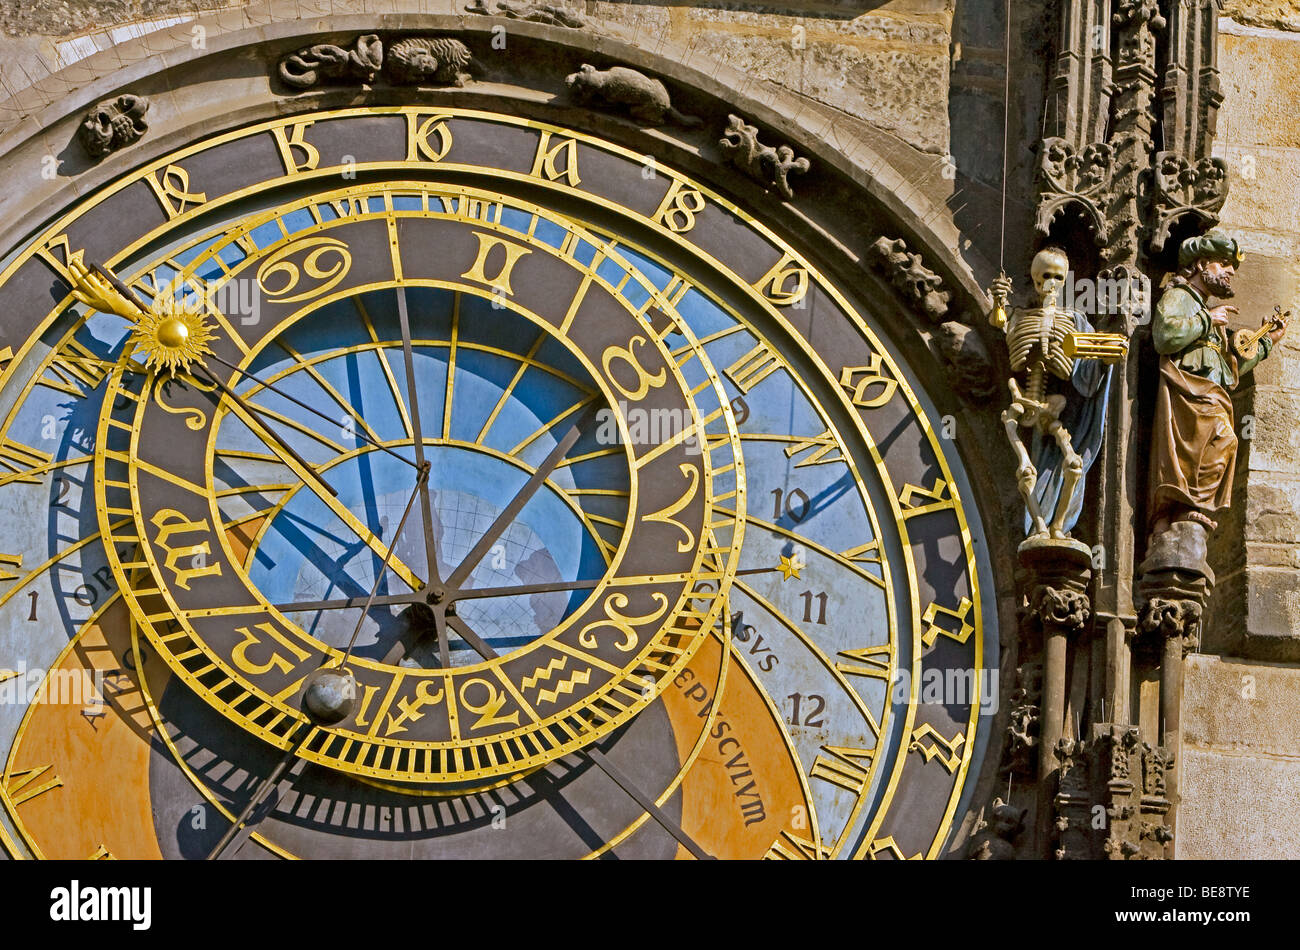 Reloj astronómico, la Plaza de la Ciudad Vieja. Plaza de la Ciudad Vieja de Praga, República Checa. Foto de stock